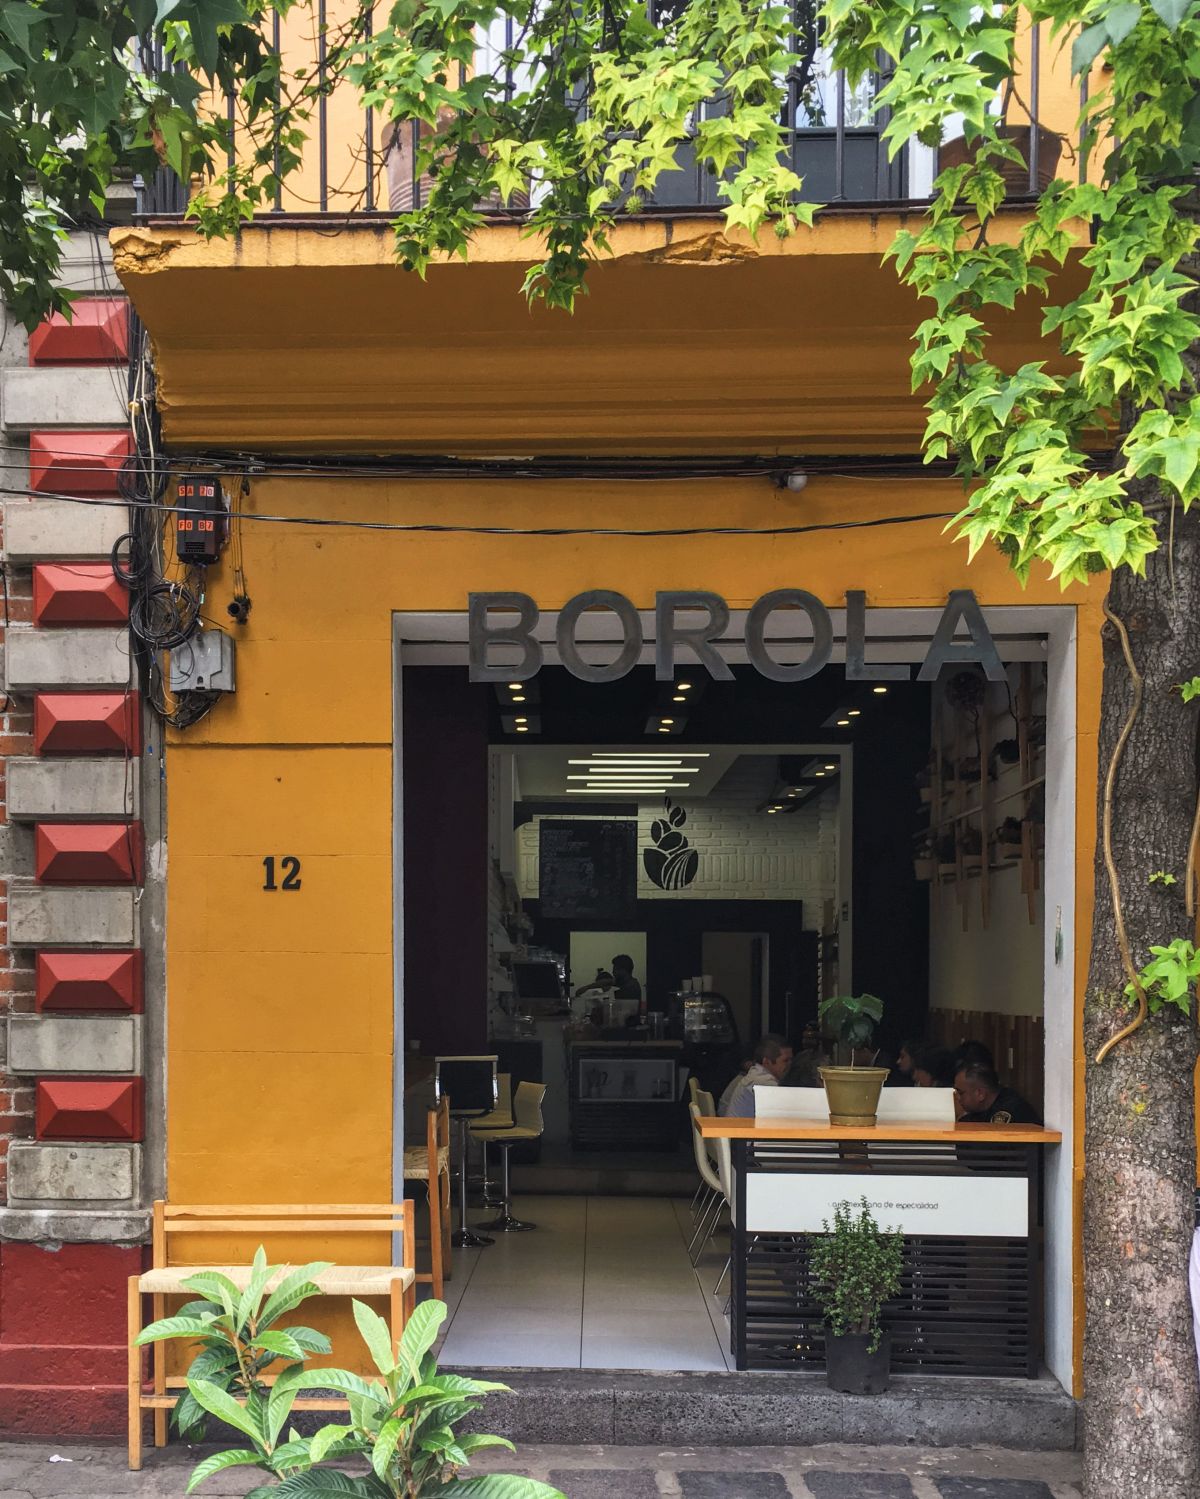 Café Borola